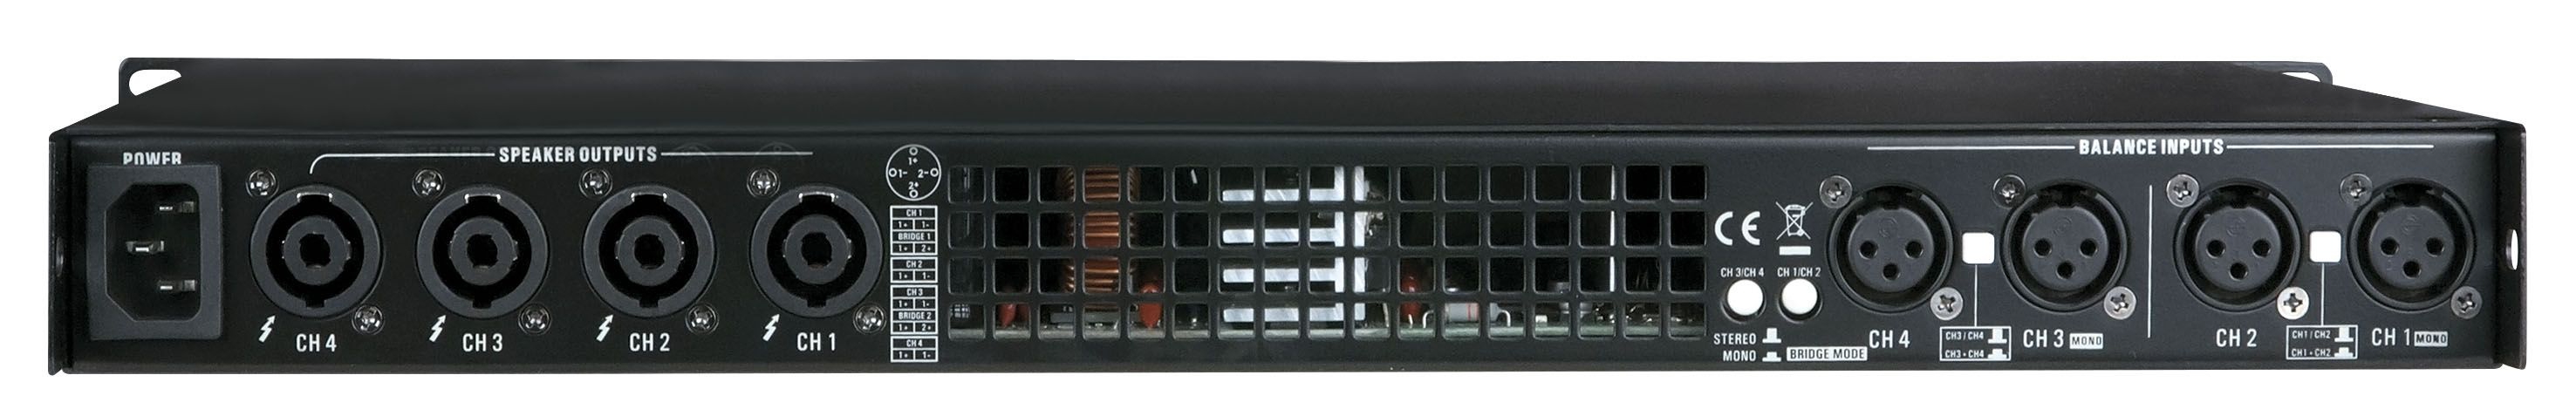 DAP-Audio Qi-4400 4 Channel installation amp 4x400